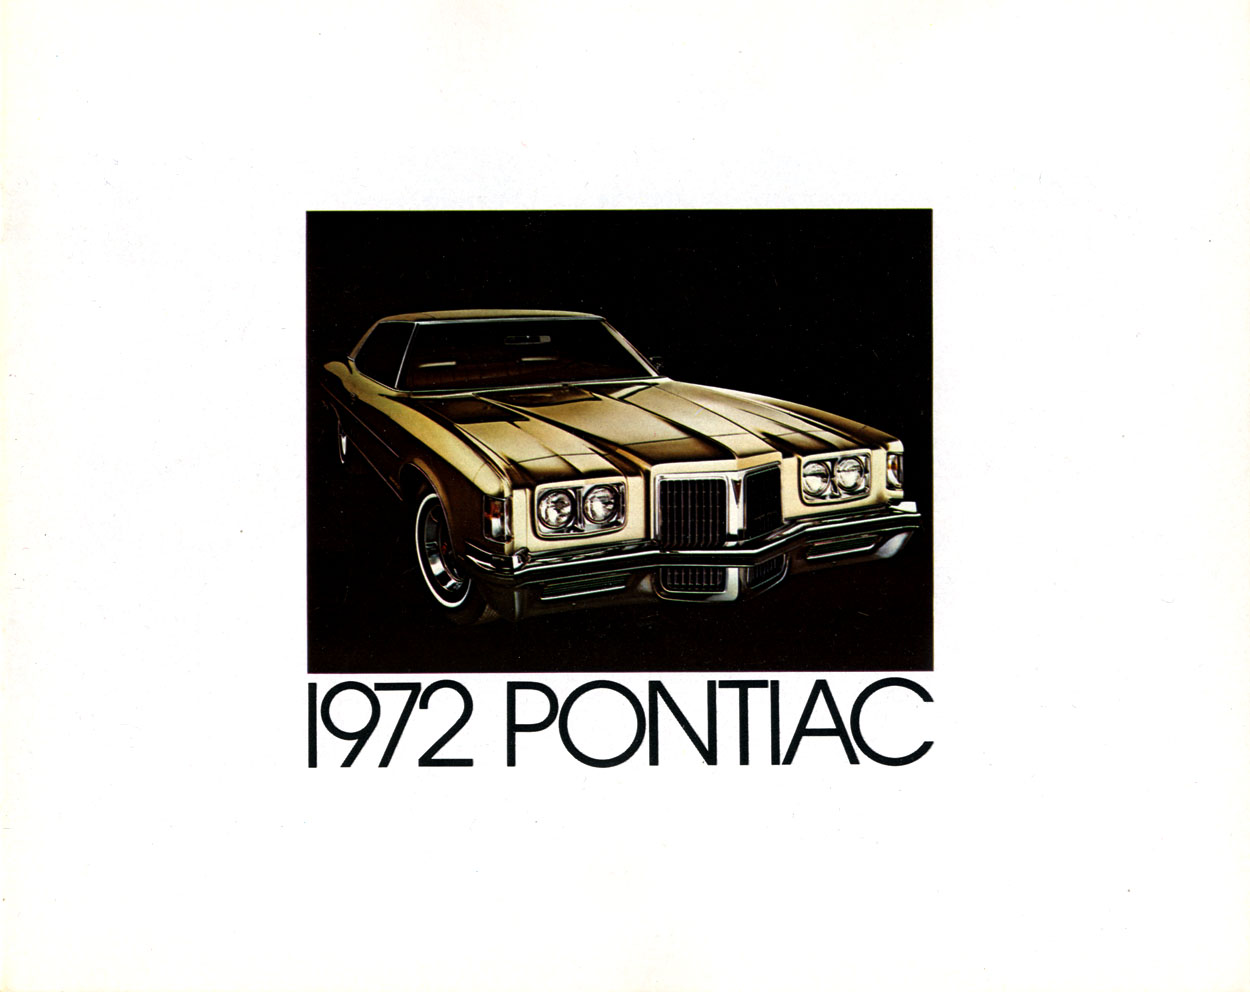 1972_Pontiac_Full_Line-01